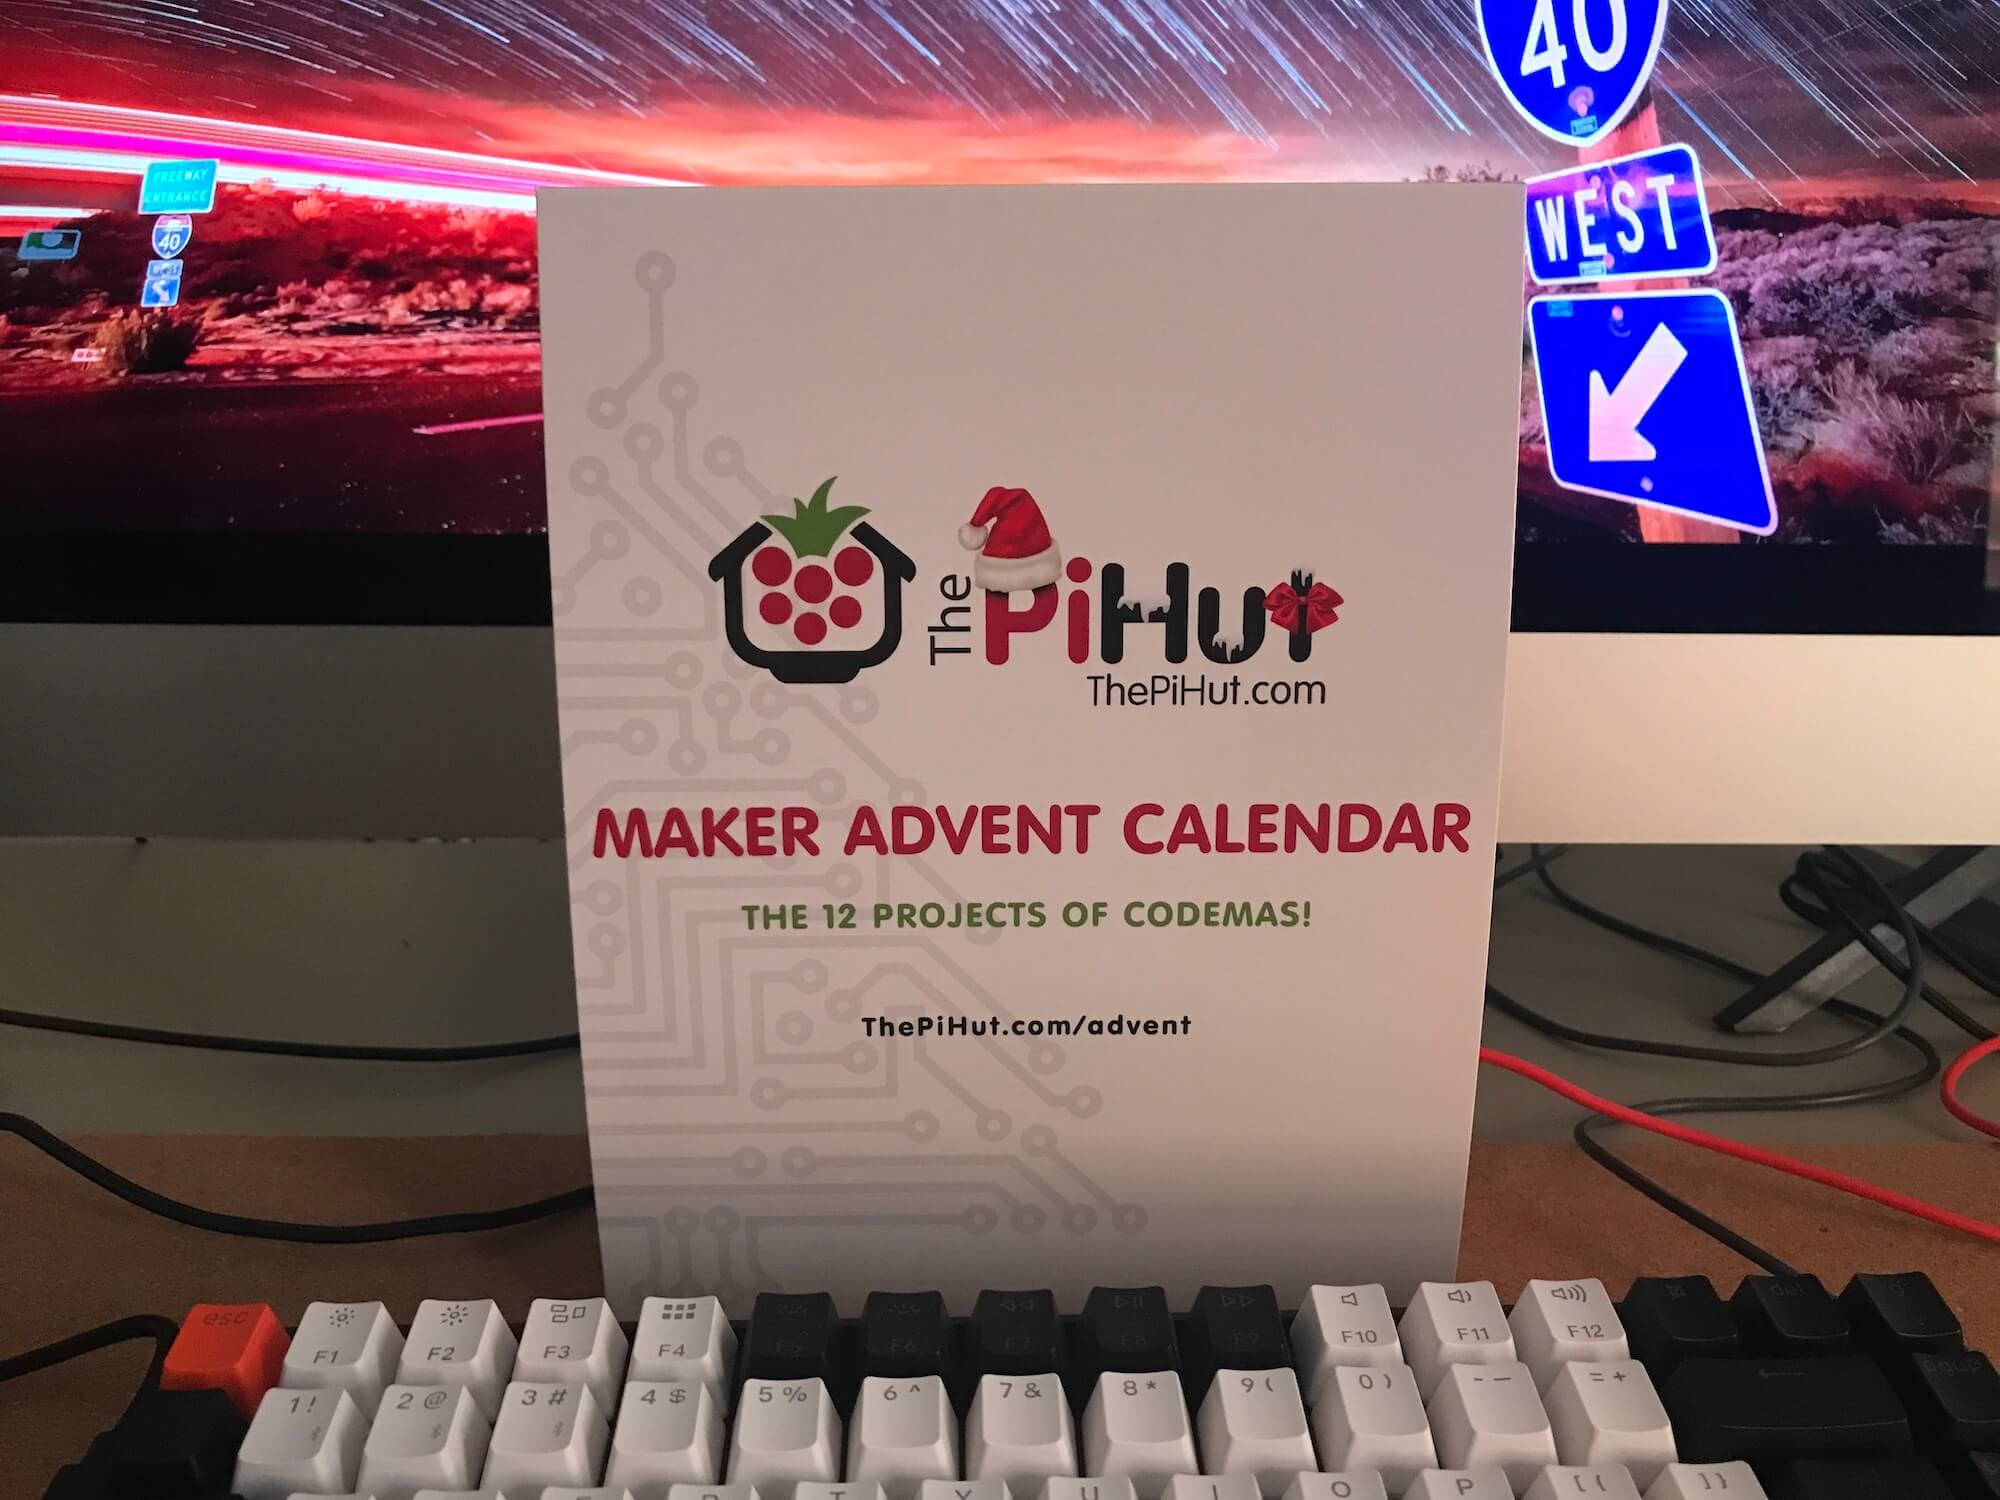 The PiHut Maker Advent Calendar in its box